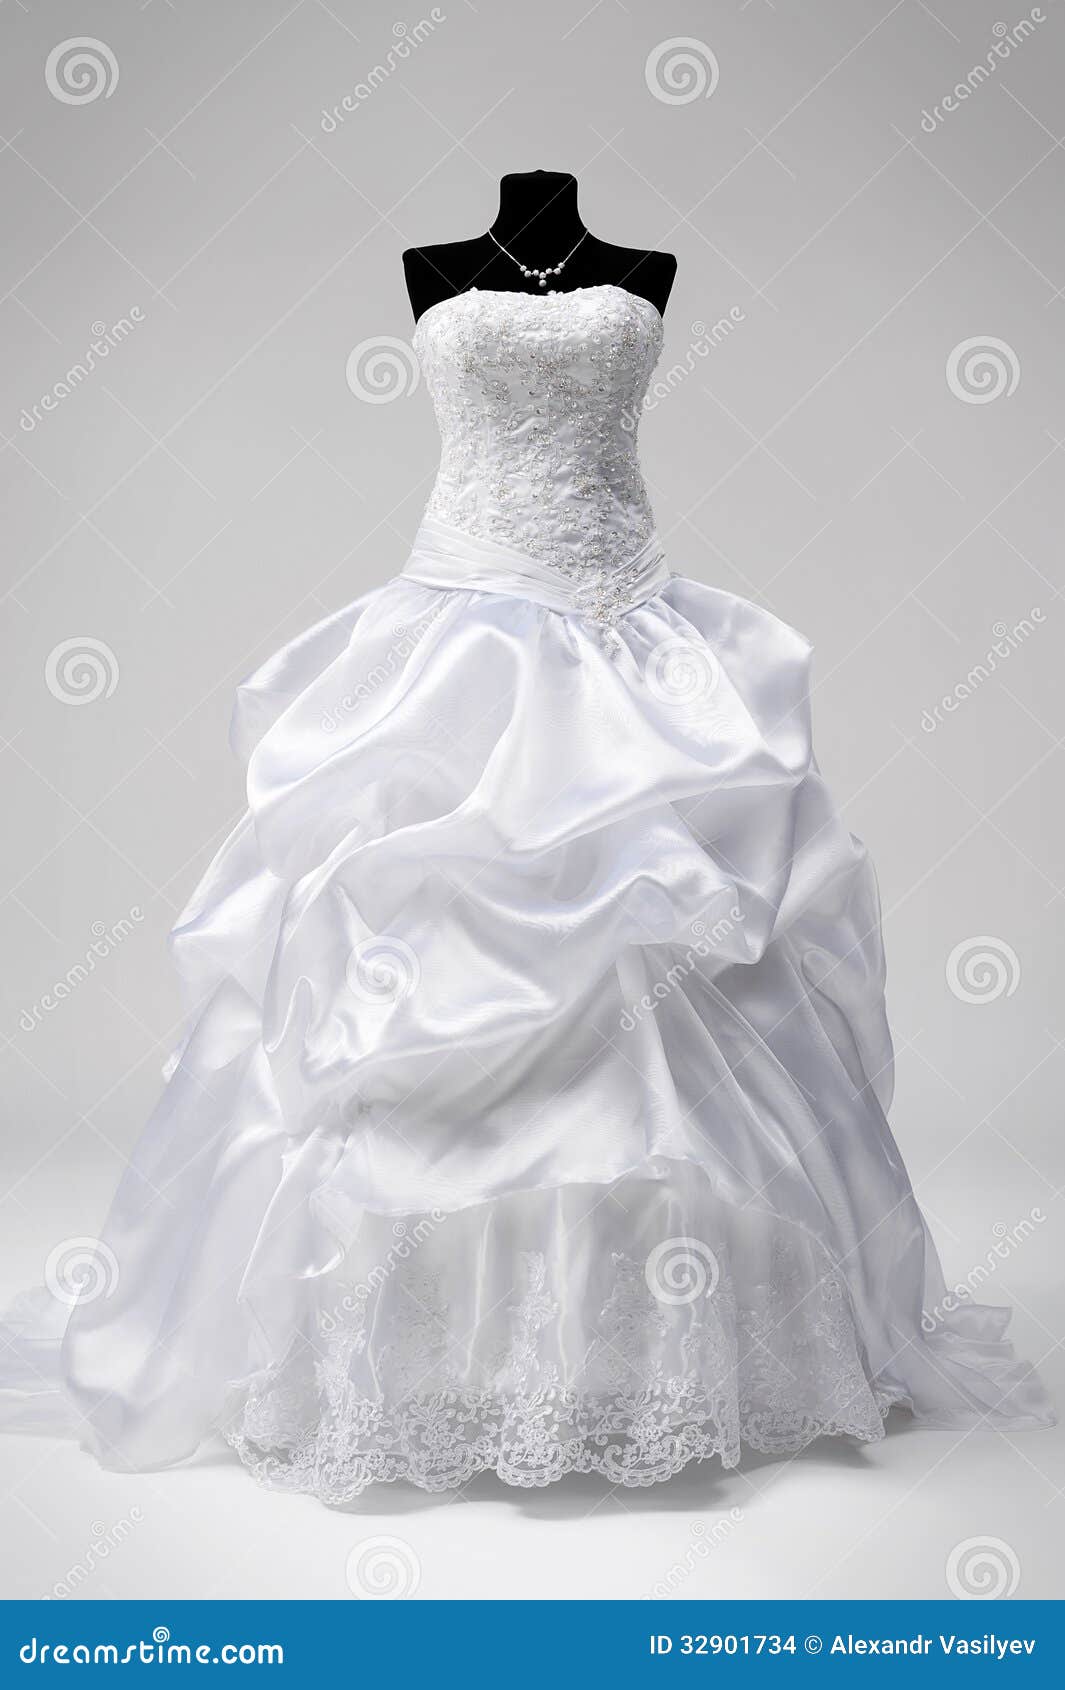 White dress on wedding